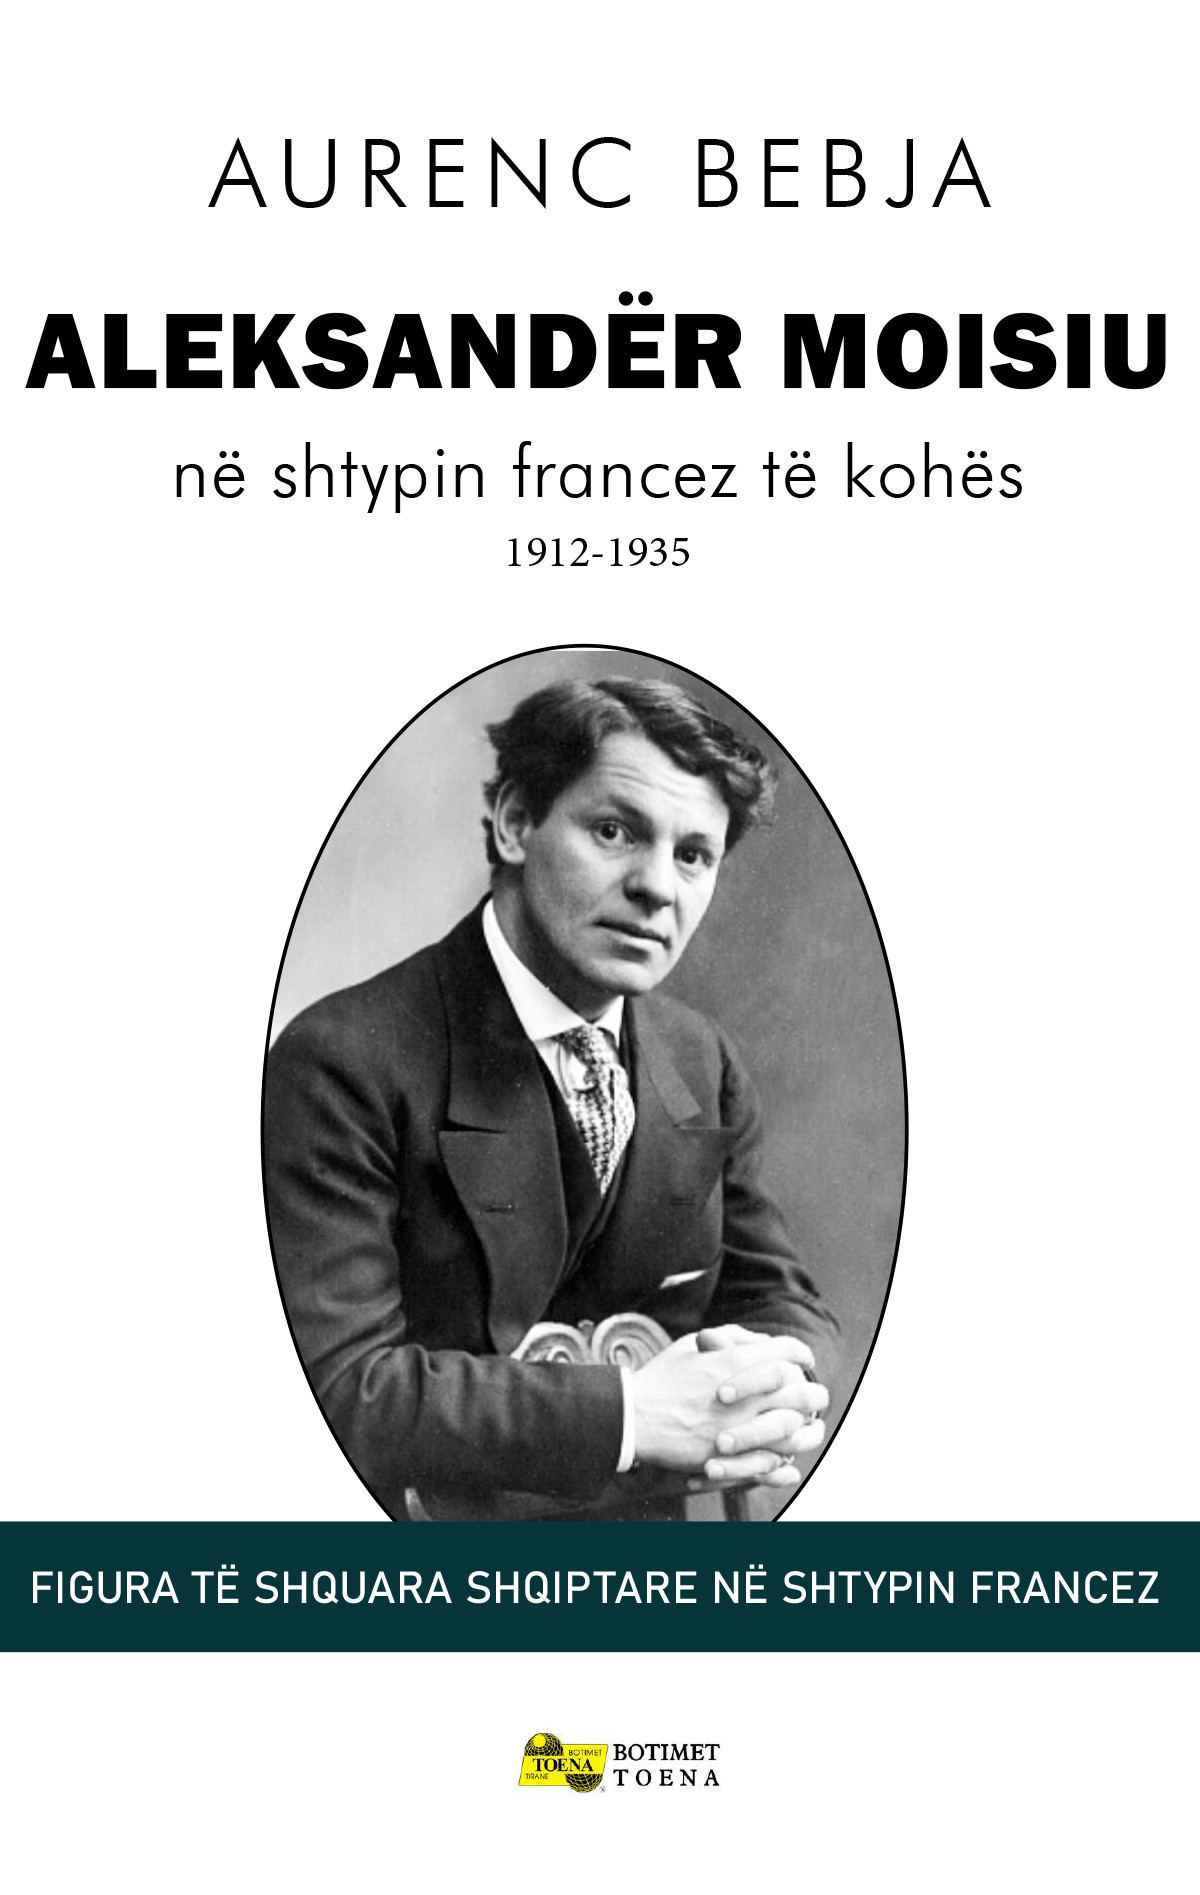 Aleksander Moisiu ne shtypin francez te kohes 1912 - 35